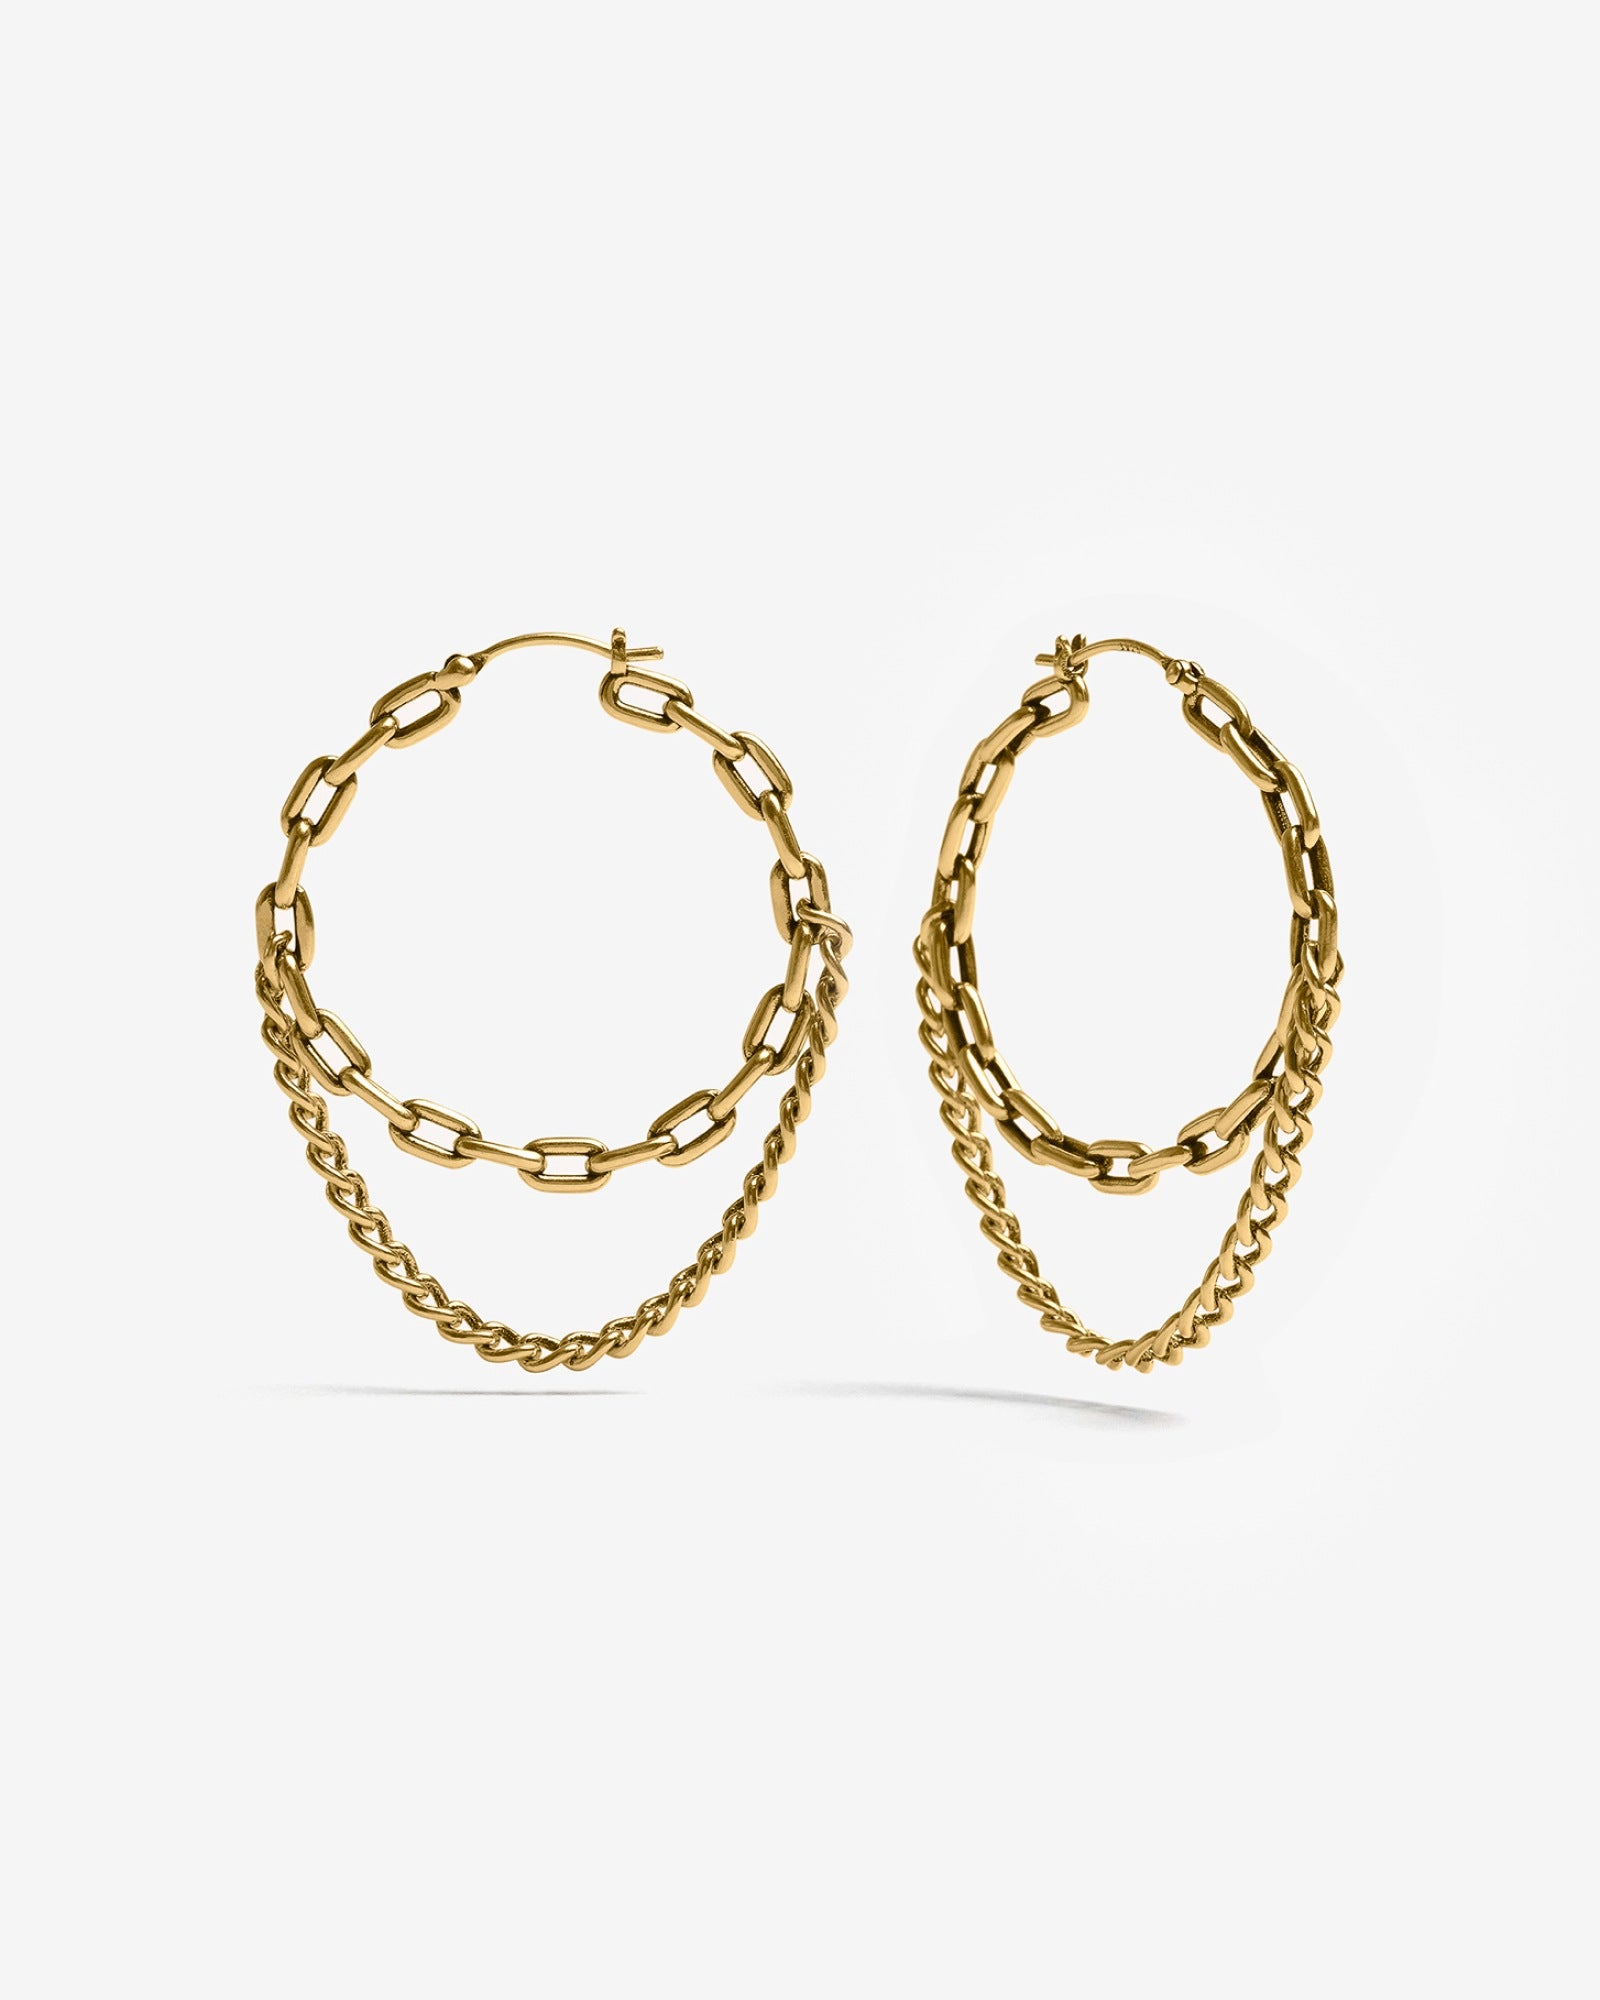 Paisley Chain Gold Long Earrings